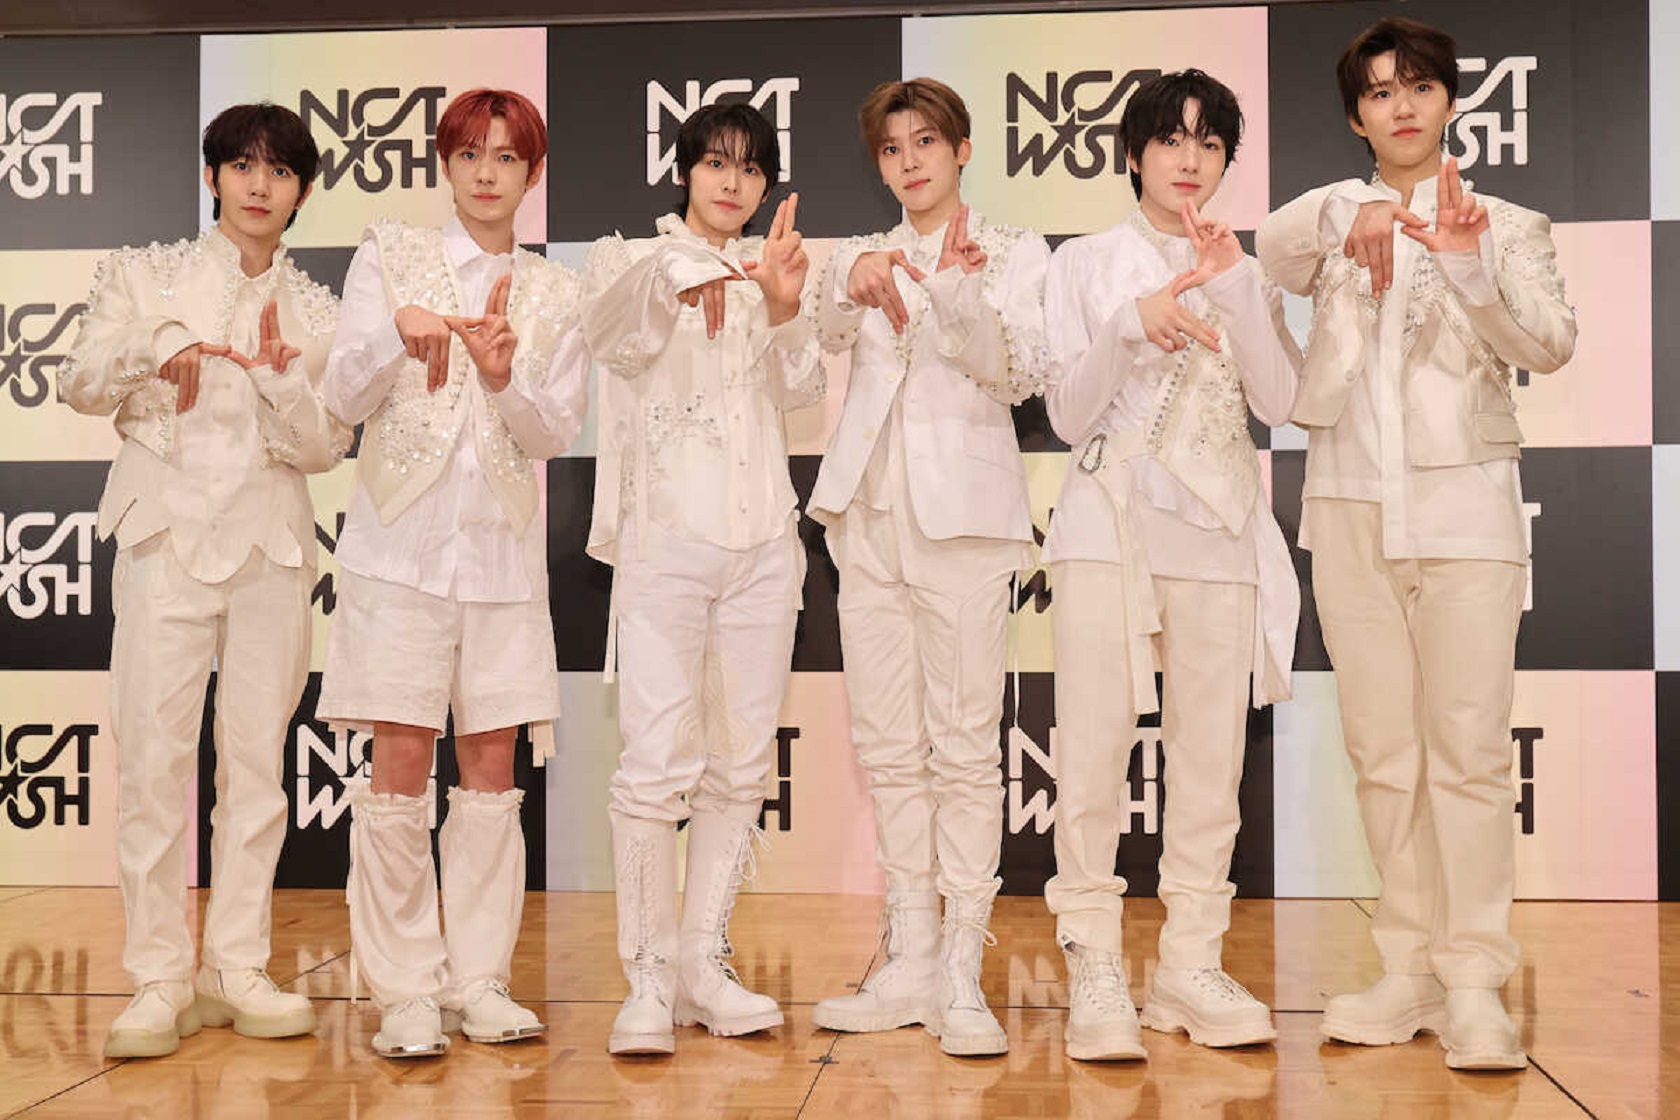 NCT WISH 東京ドームから世界へ! 音楽&愛で人々の願いと夢を応援 韓国発男性6人組堂々デビュー